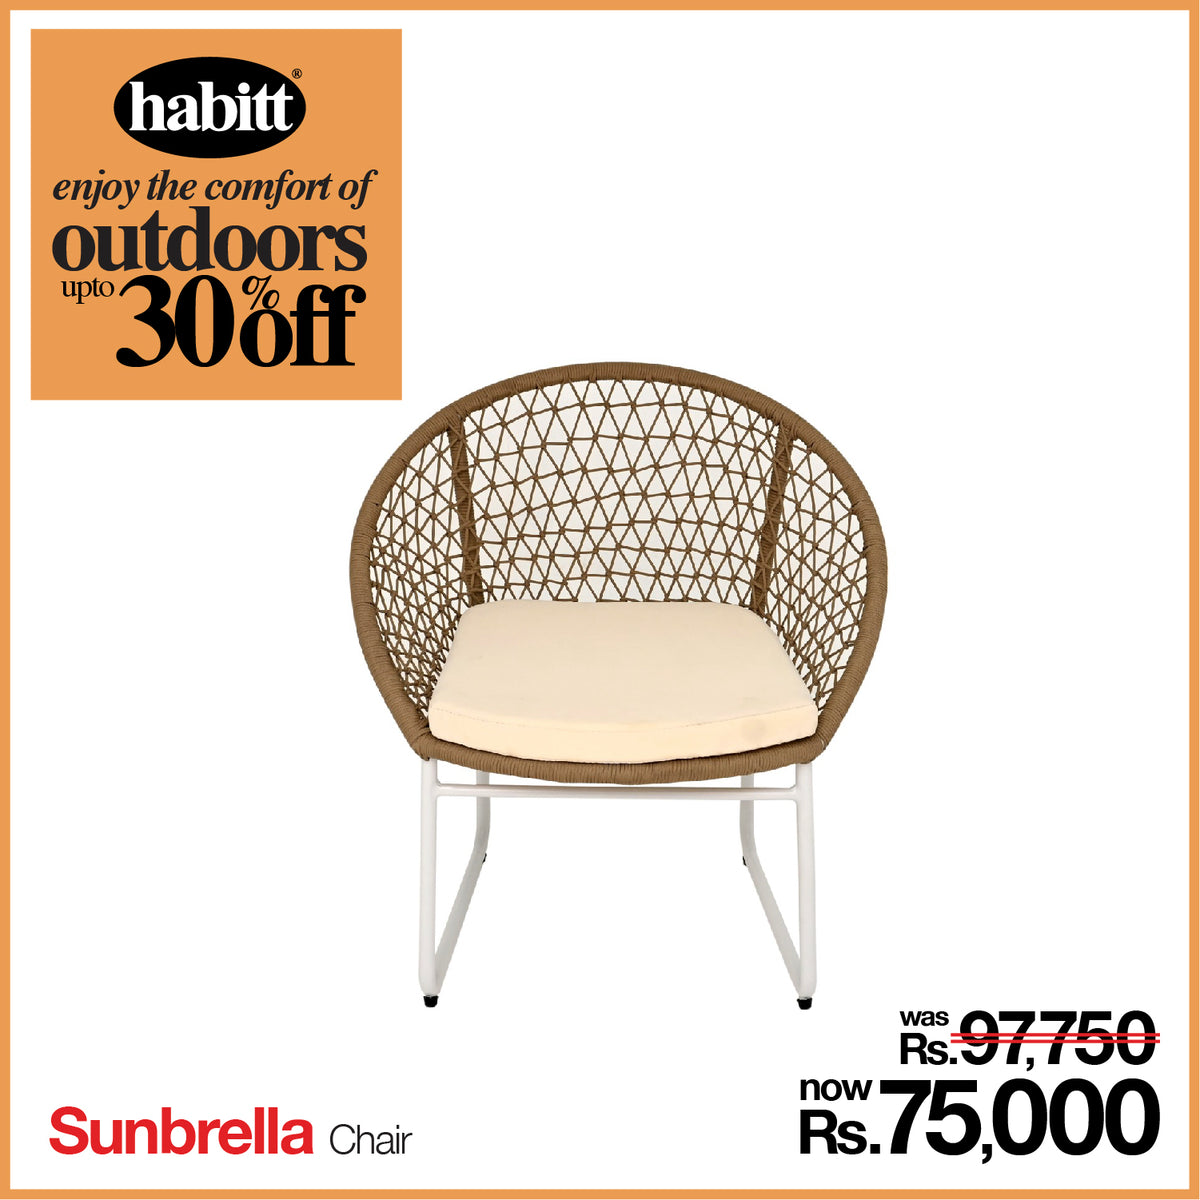 Sunbrella Chair